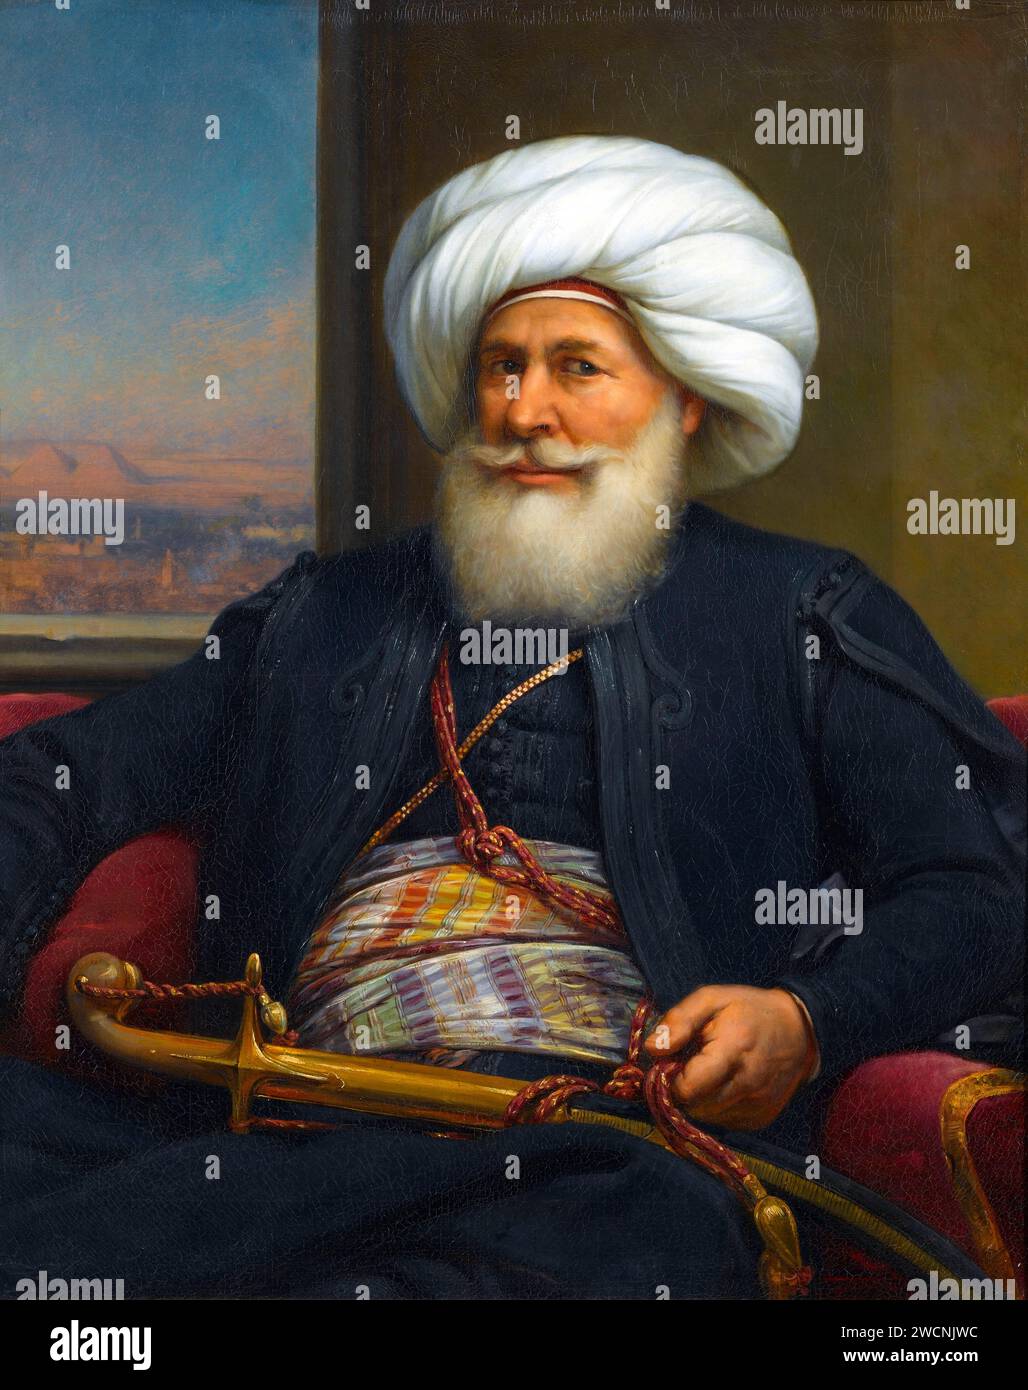 Muhammad Ali (1769 – 1849) governatore albanese ottomano e regnante de facto dell'Egitto dal 1805 al 1848, Mısır Valisi, Kavalalı Mehmet Ali Paşa, dipinto di Auguste Couder Foto Stock